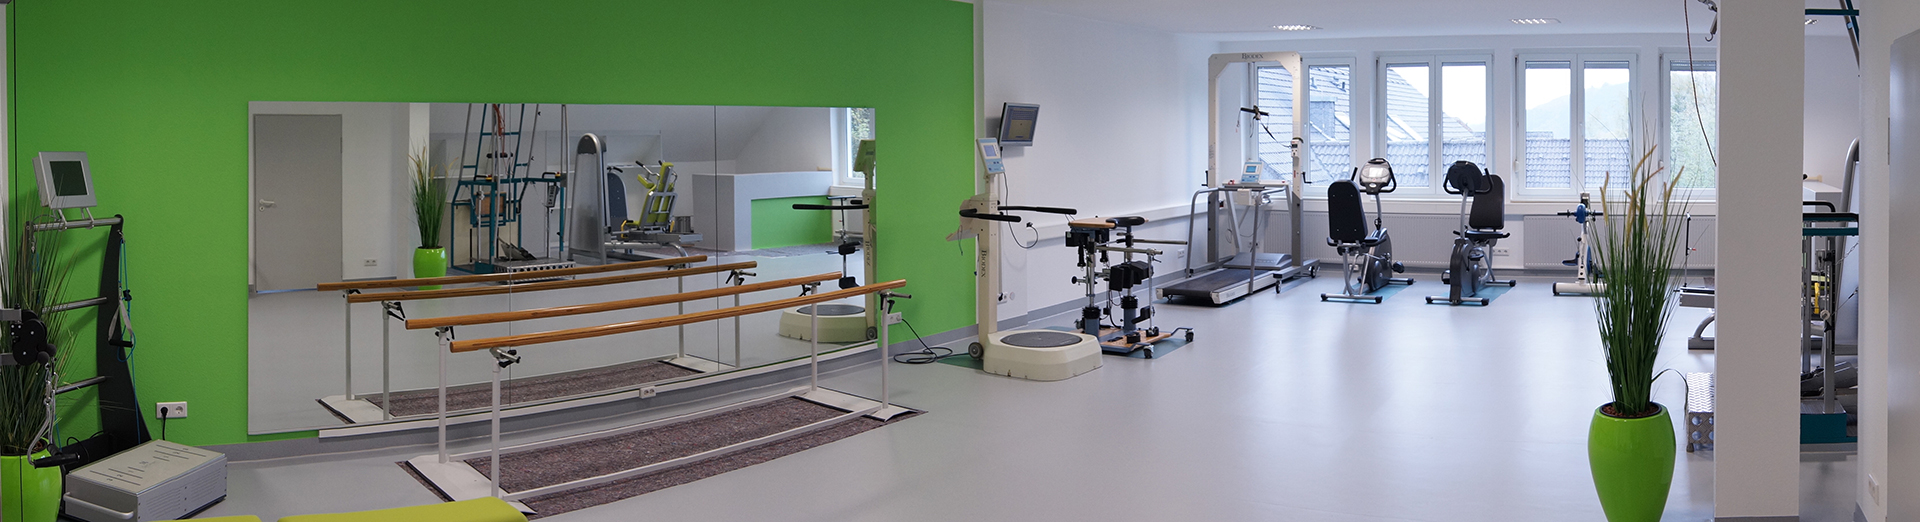 Klinik am Stein Olsberg - Trainingsraum